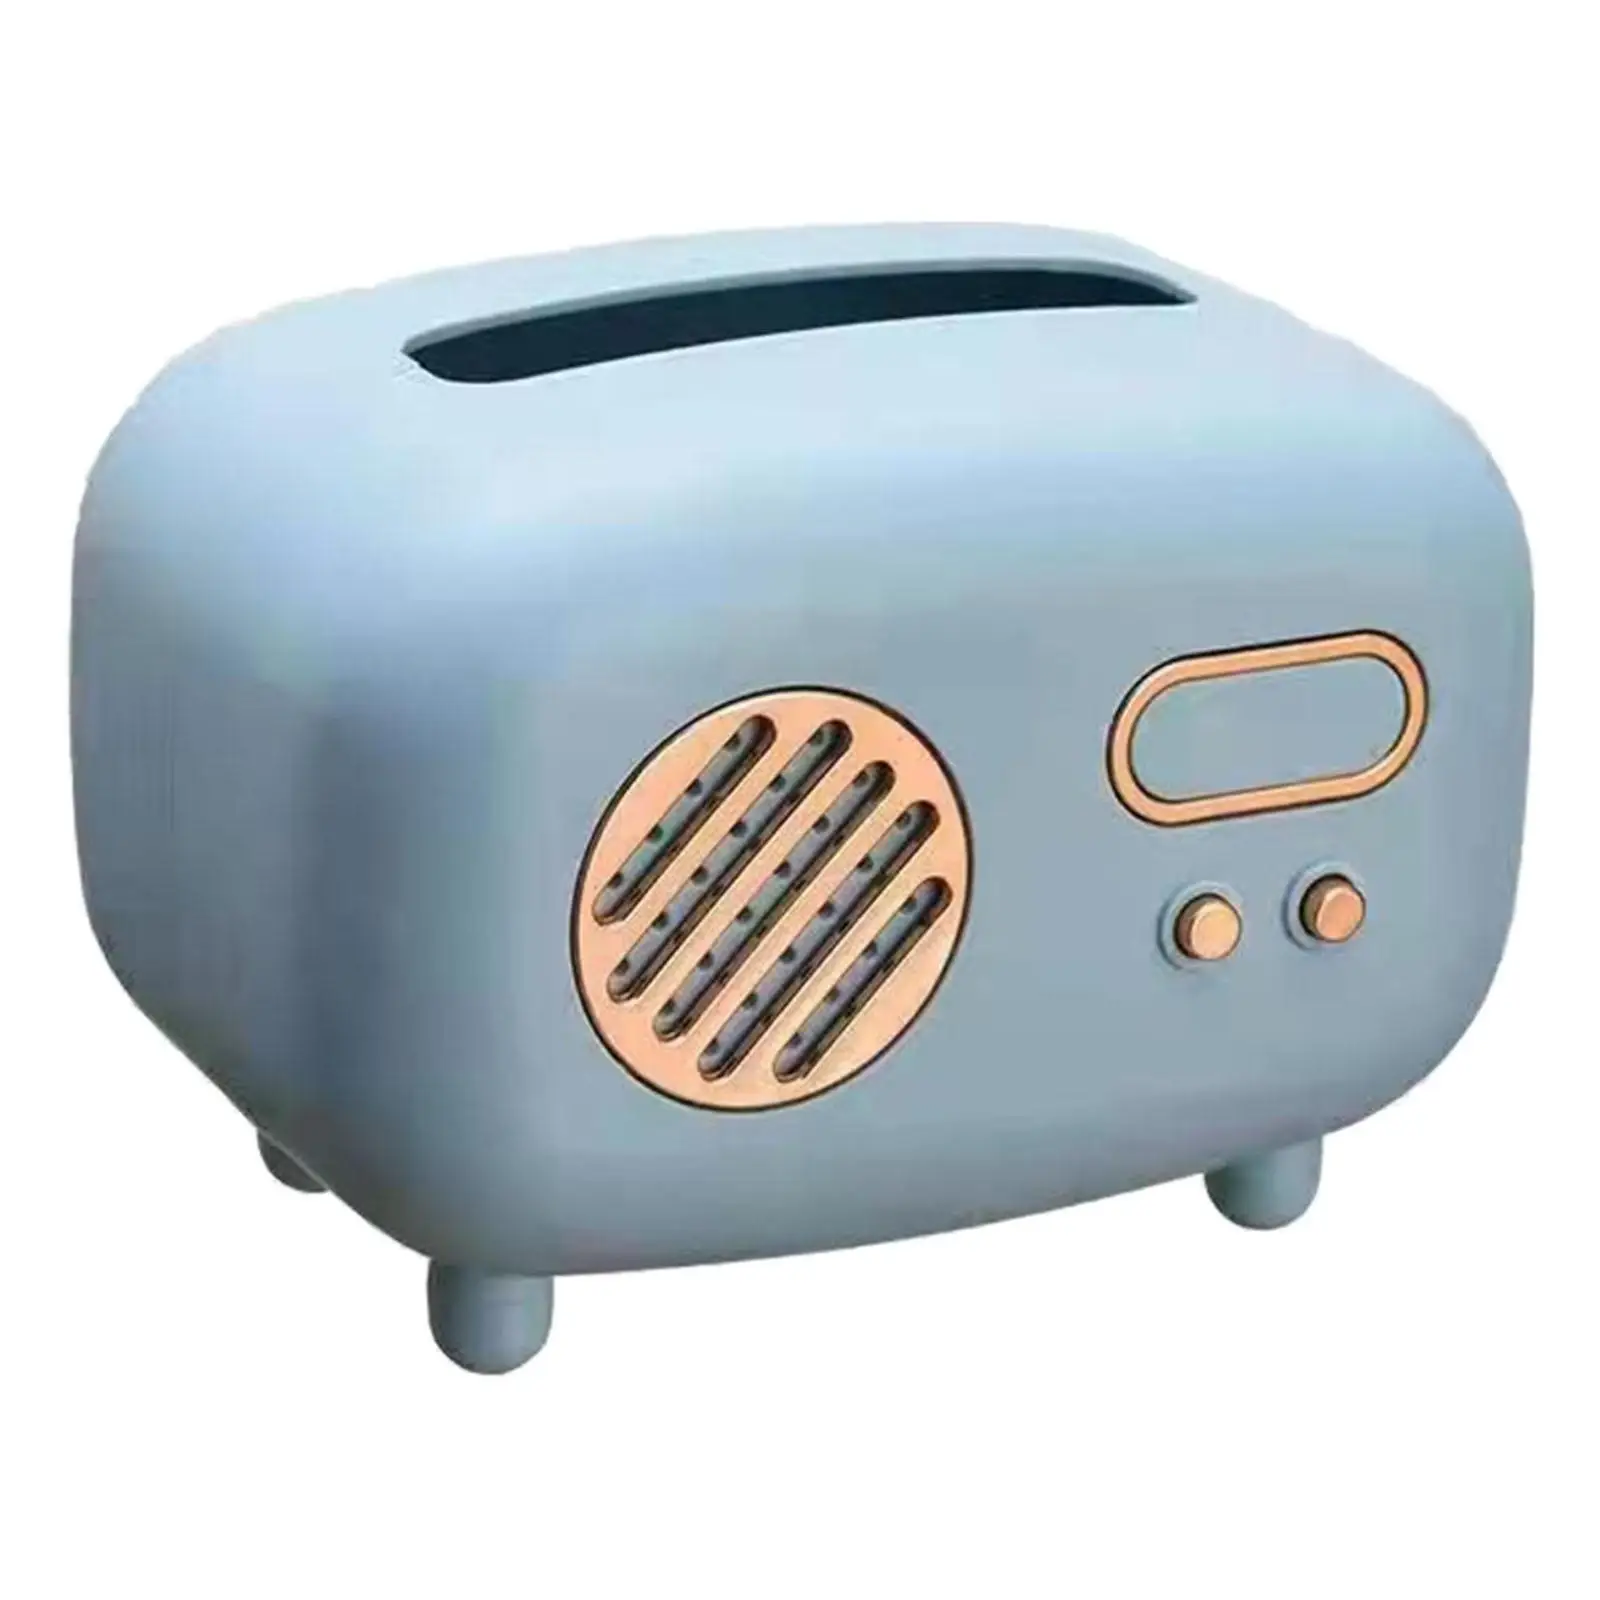 Radio Facial Tissue Box,Napkin Holder Paper Towel Dispenser Container for Bedroom,Car,Office,Restaurant,Desk